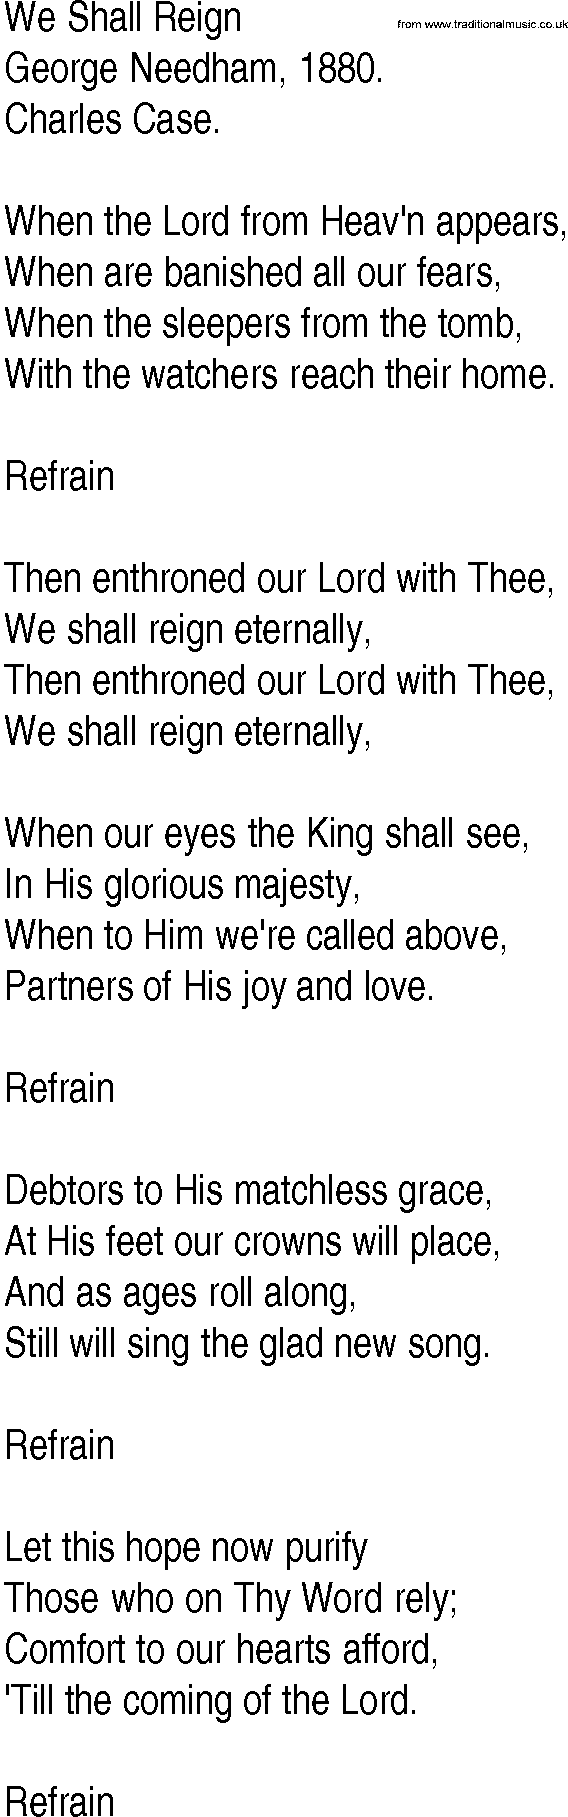 Hymn and Gospel Song: We Shall Reign by George Needham lyrics